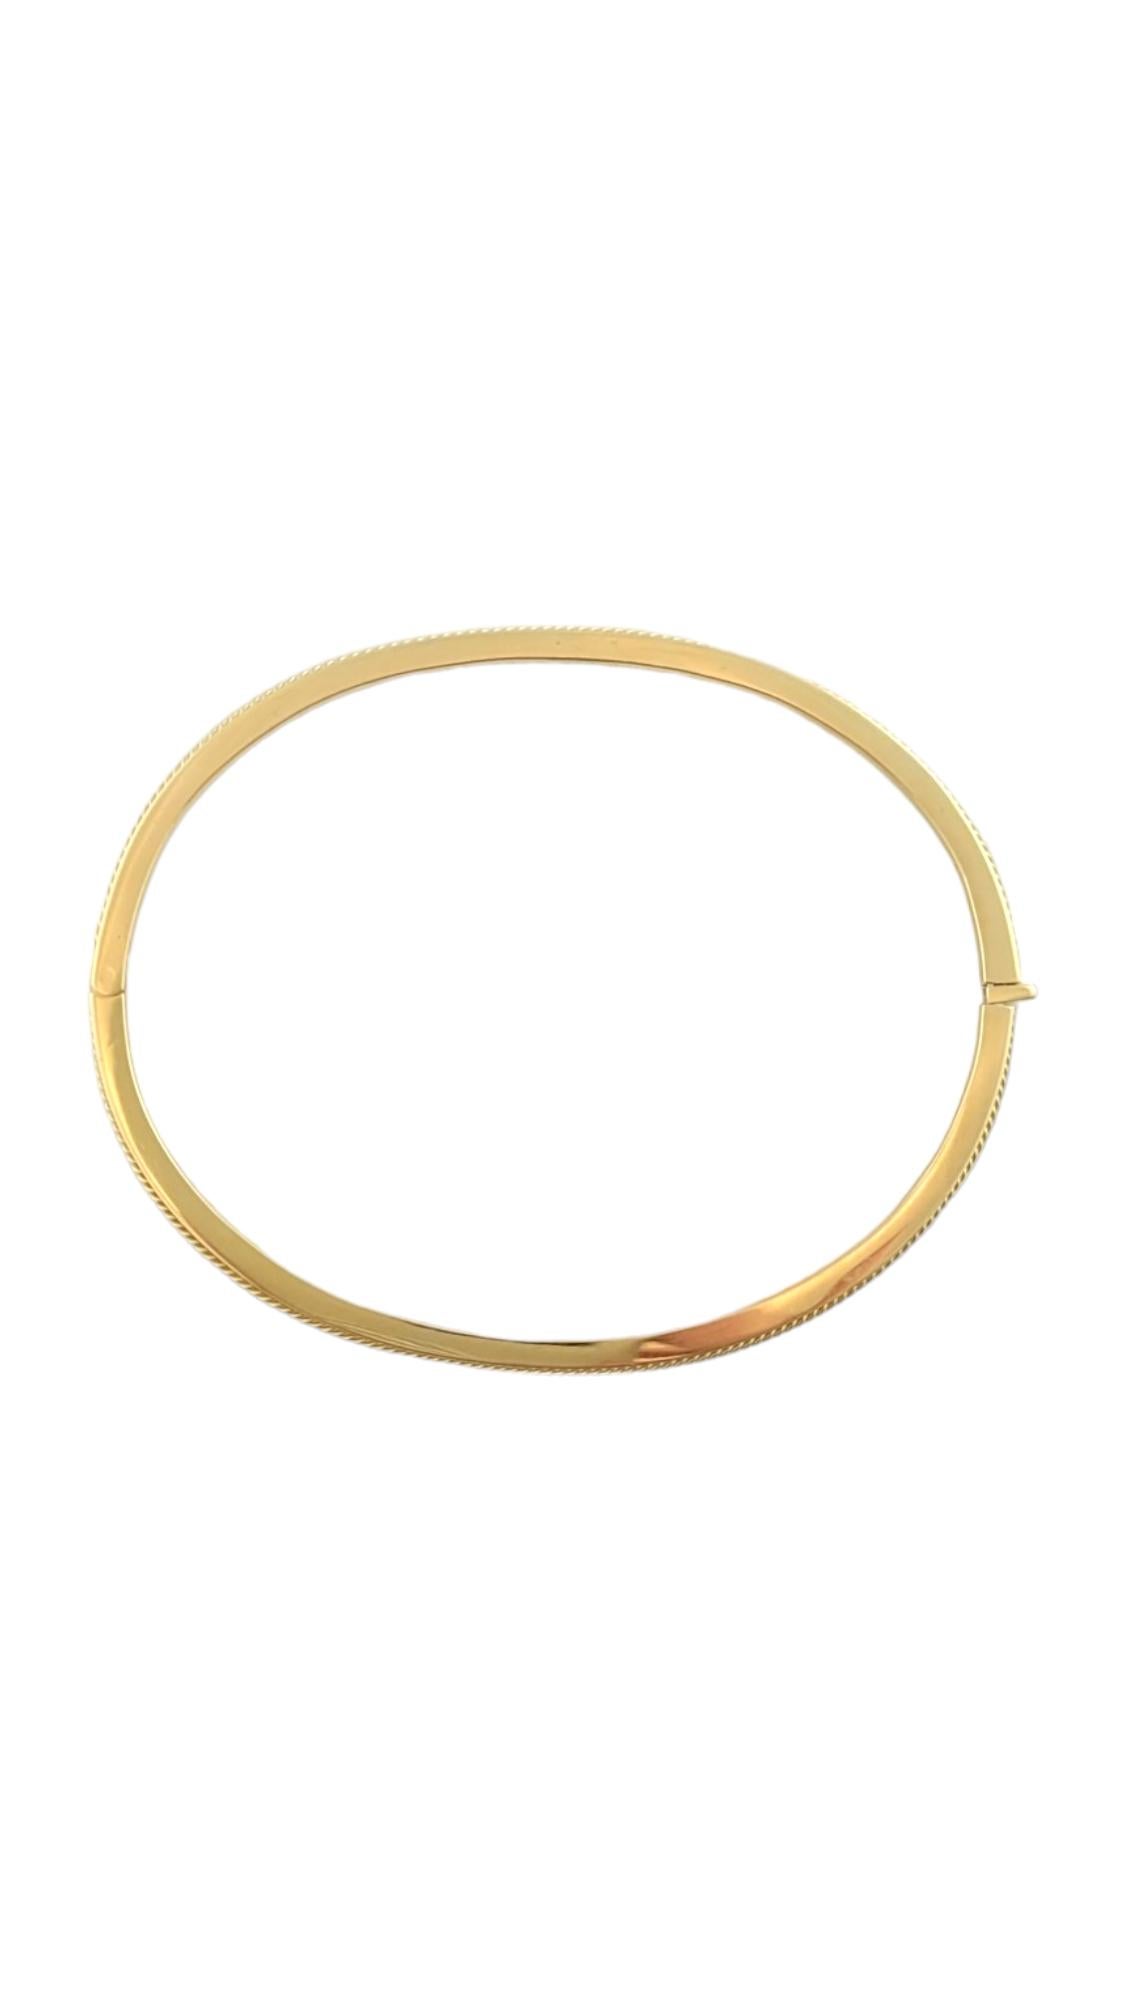 Hidalgo 18K Yellow Gold Oval Rope Accented Bangle Bracelet #16087 2